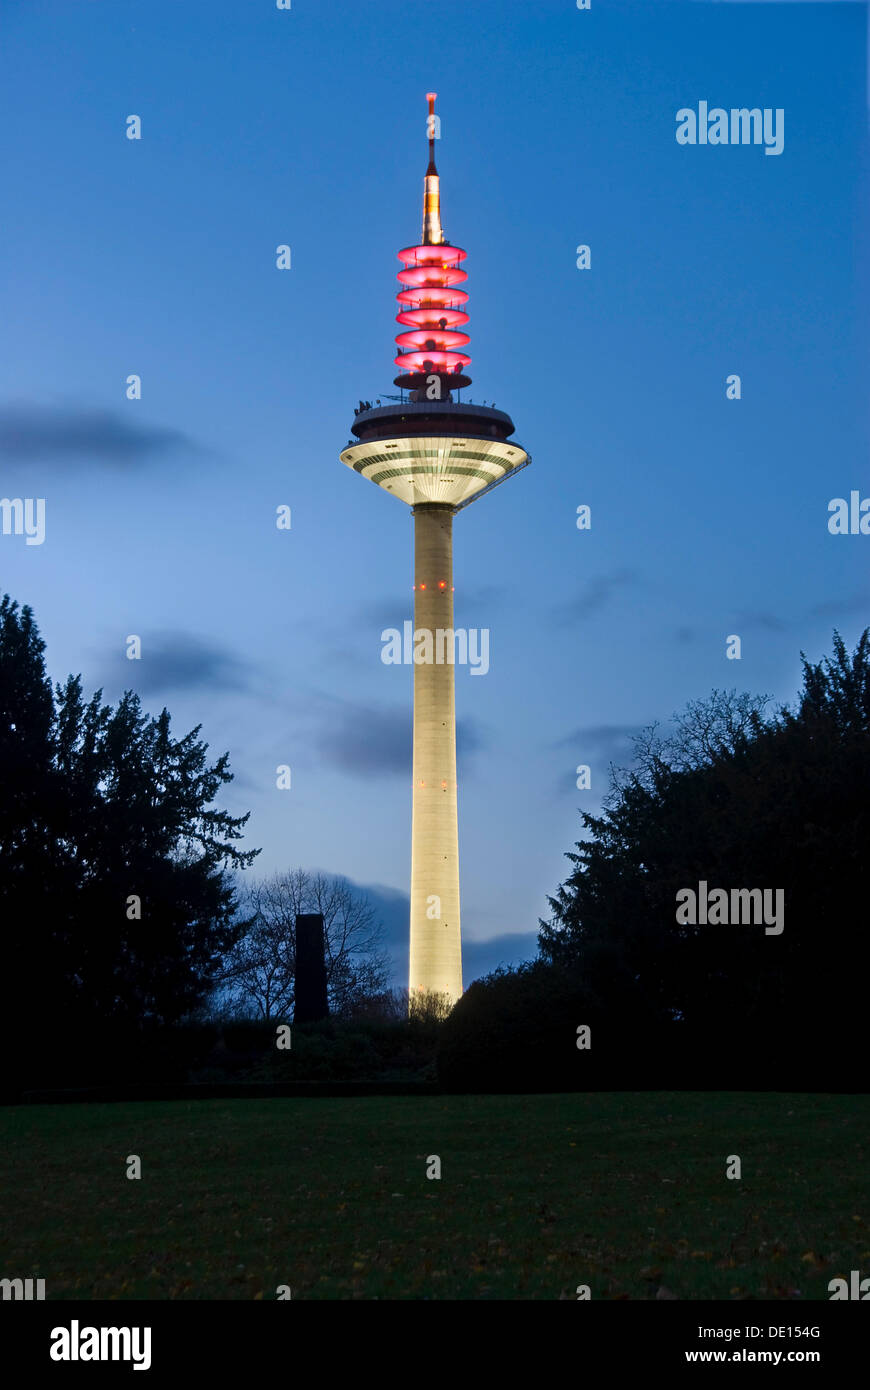 Abendstimmung, beleuchtete Europaturm Turm, inoffiziell bekannt als Ginnheim Spargel, Frankfurt Am Main, Hessen Stockfoto